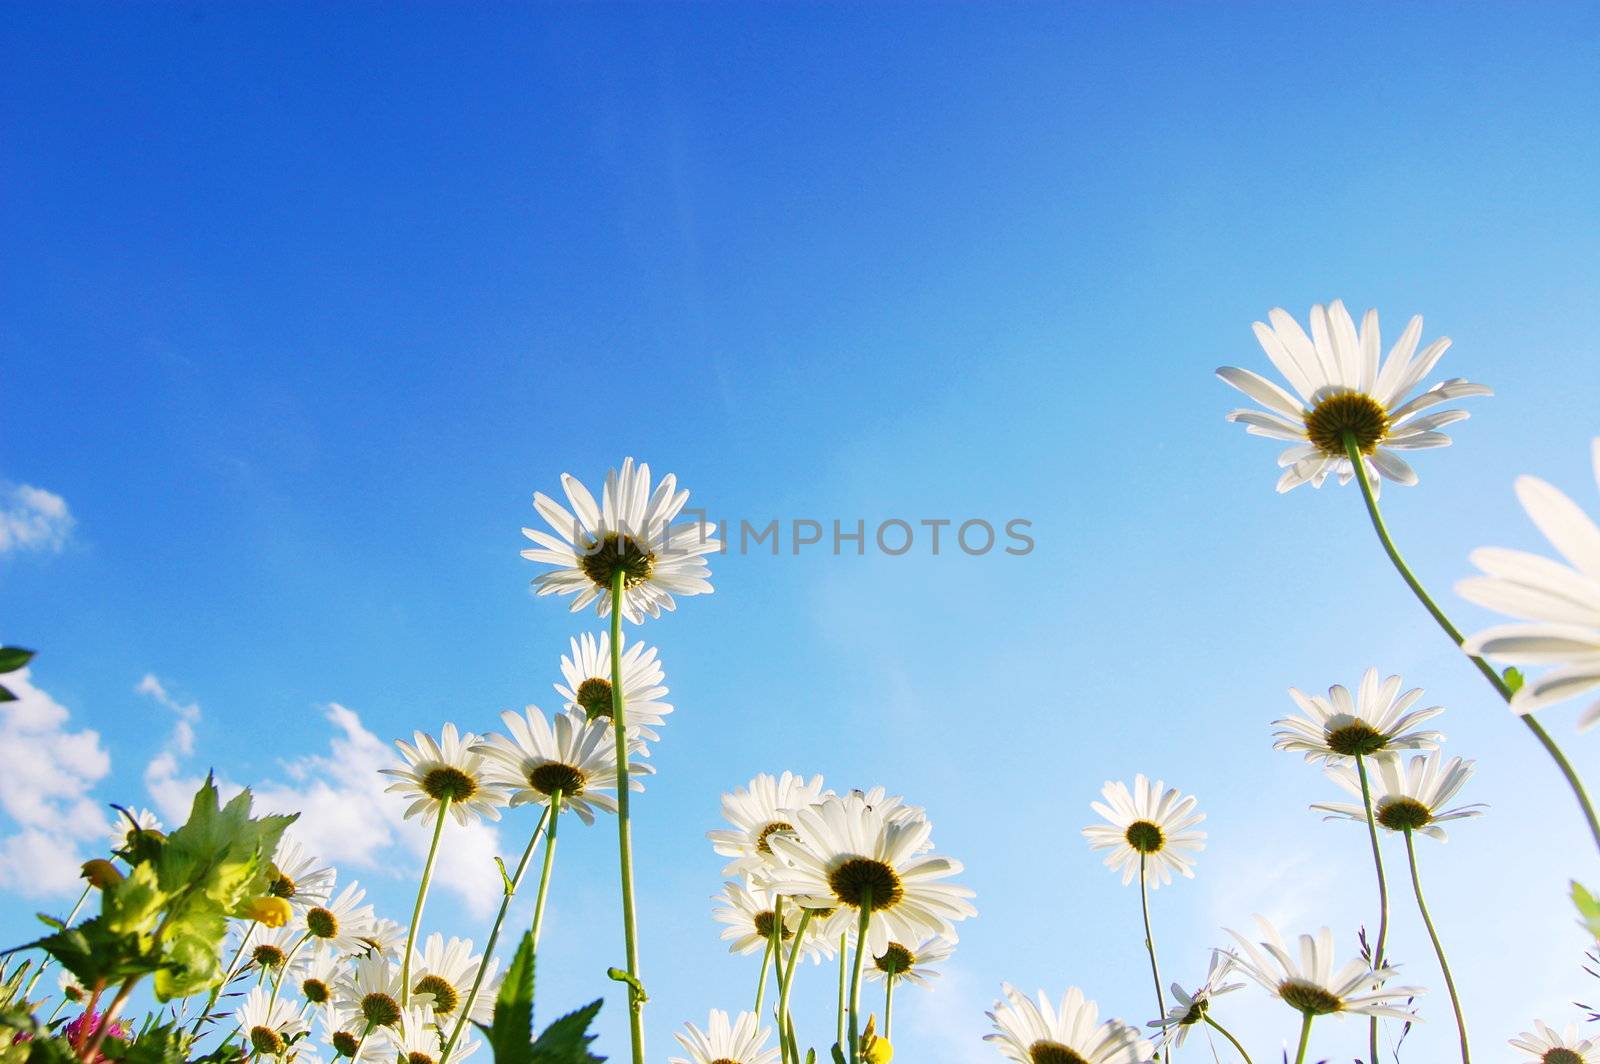 daisy flower under blue sky by gunnar3000